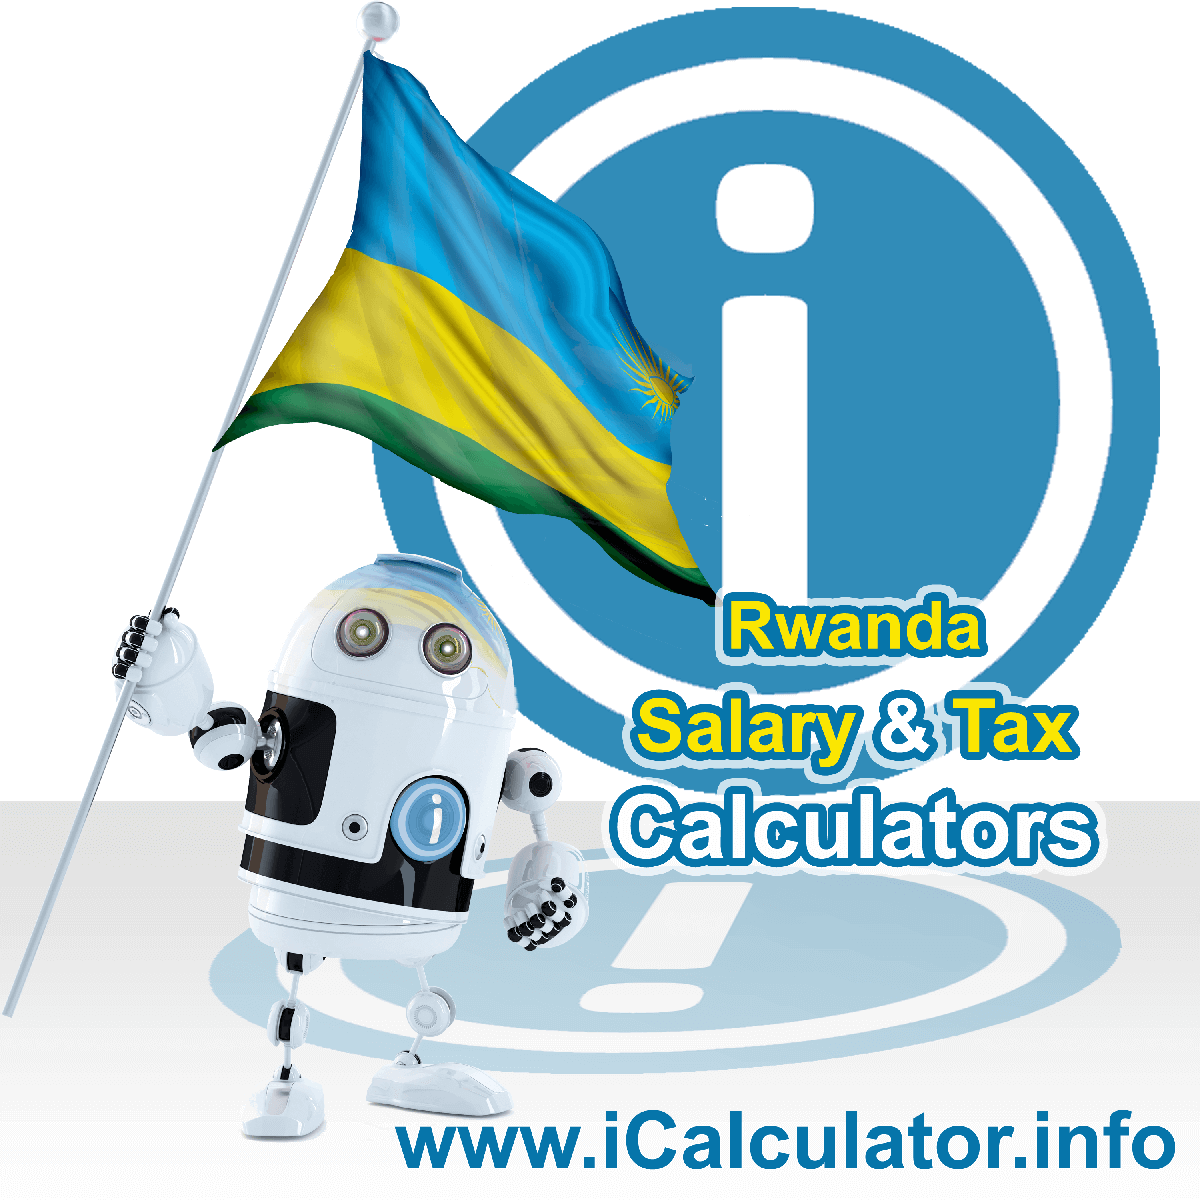 Rwanda Salary Calculator. This image shows the Rwandaese flag and information relating to the tax formula for the Rwanda Tax Calculator